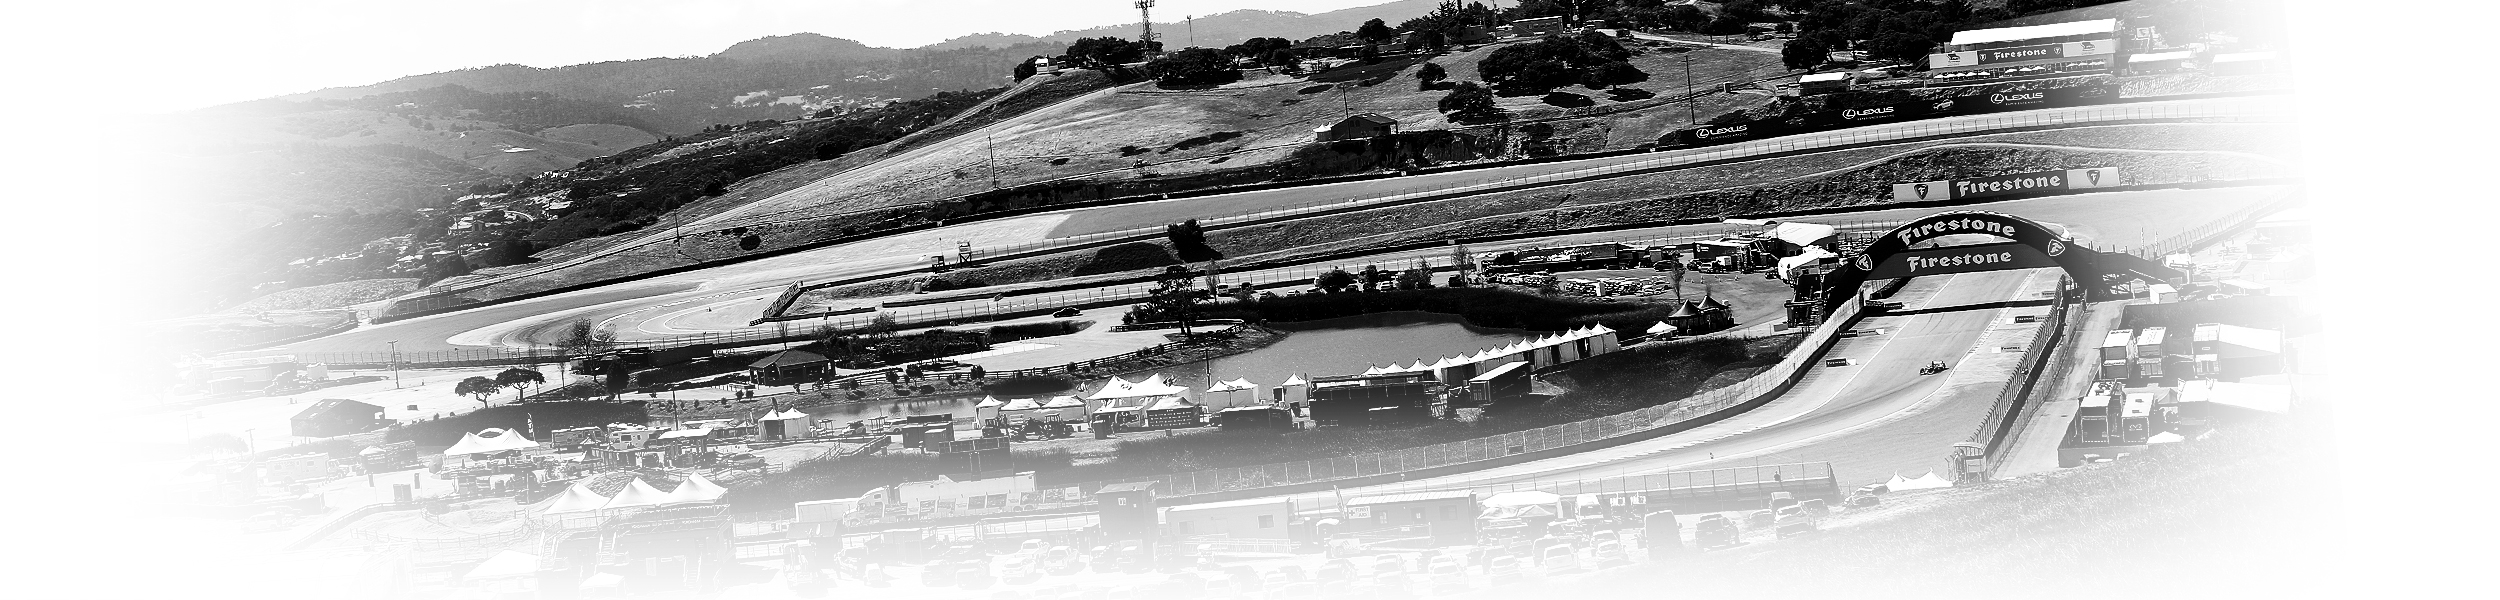 WeatherTech Raceway Laguna Seca